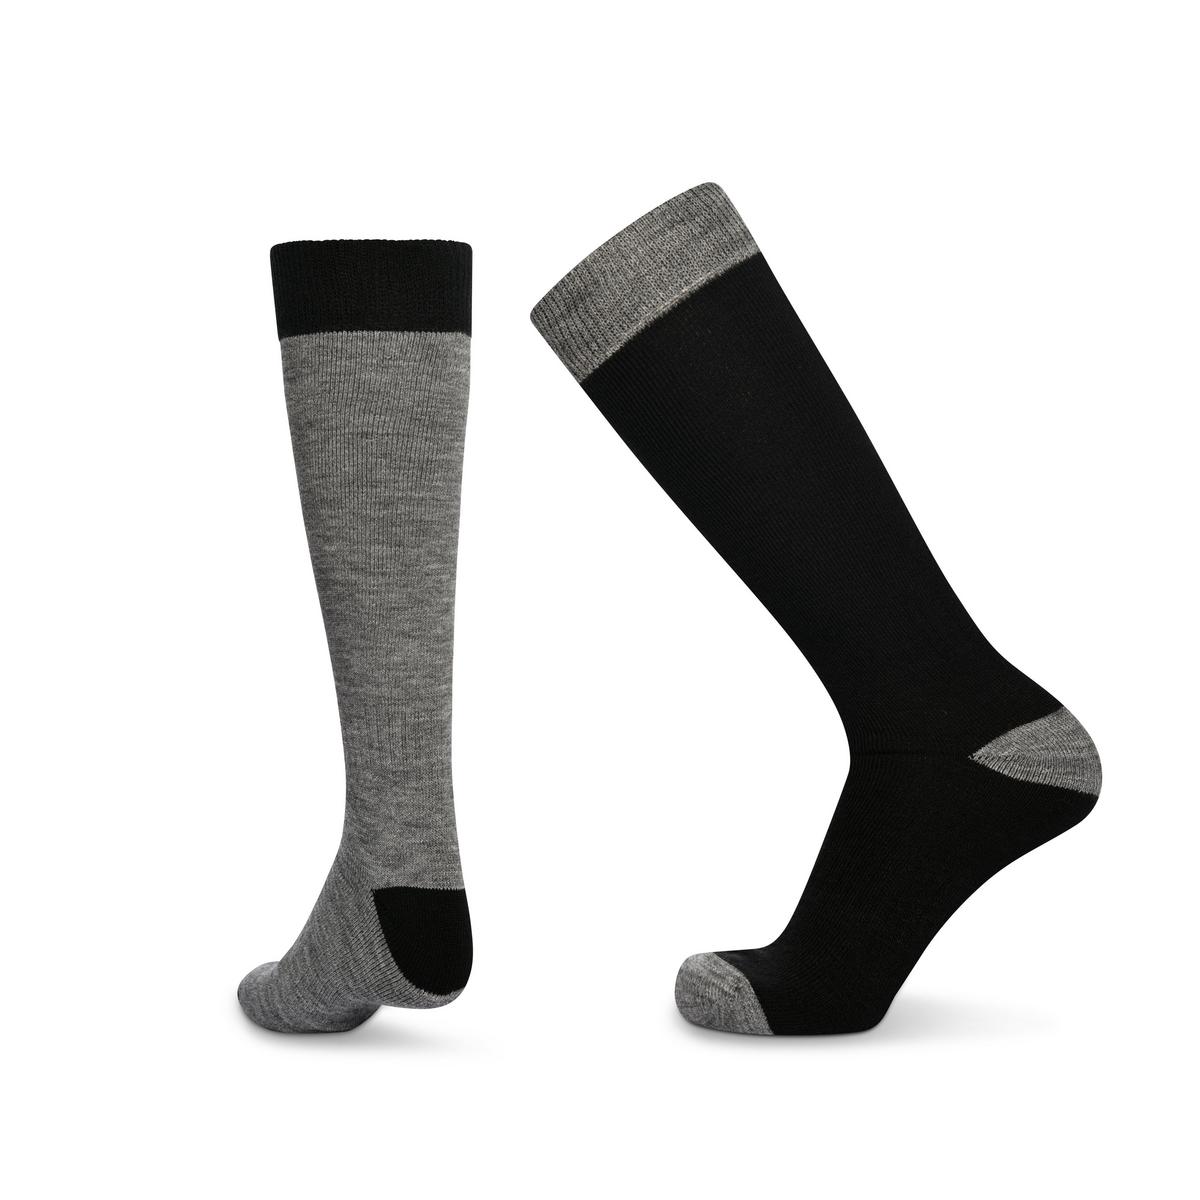 Sundown Men's 2 Pack Ski Socks - Black/Grey